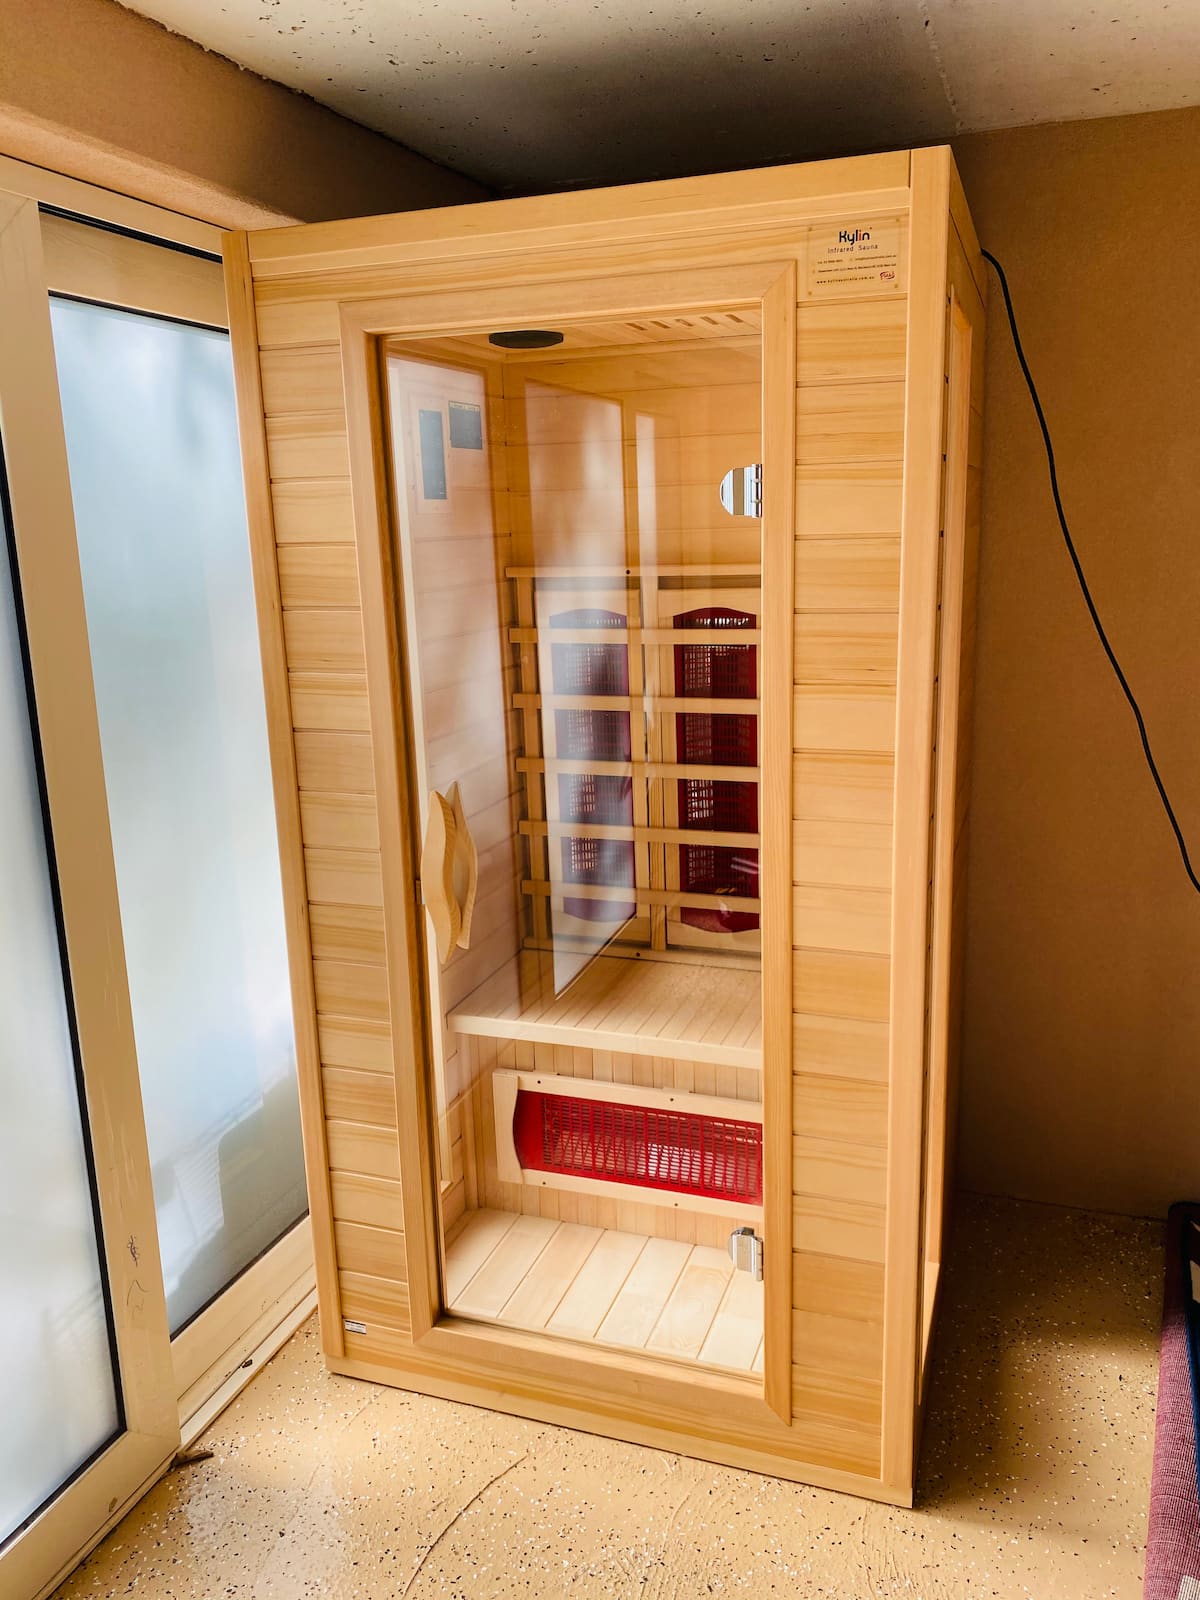 Kylin Ceramic Infrared Sauna Room 1 person – KY1A5